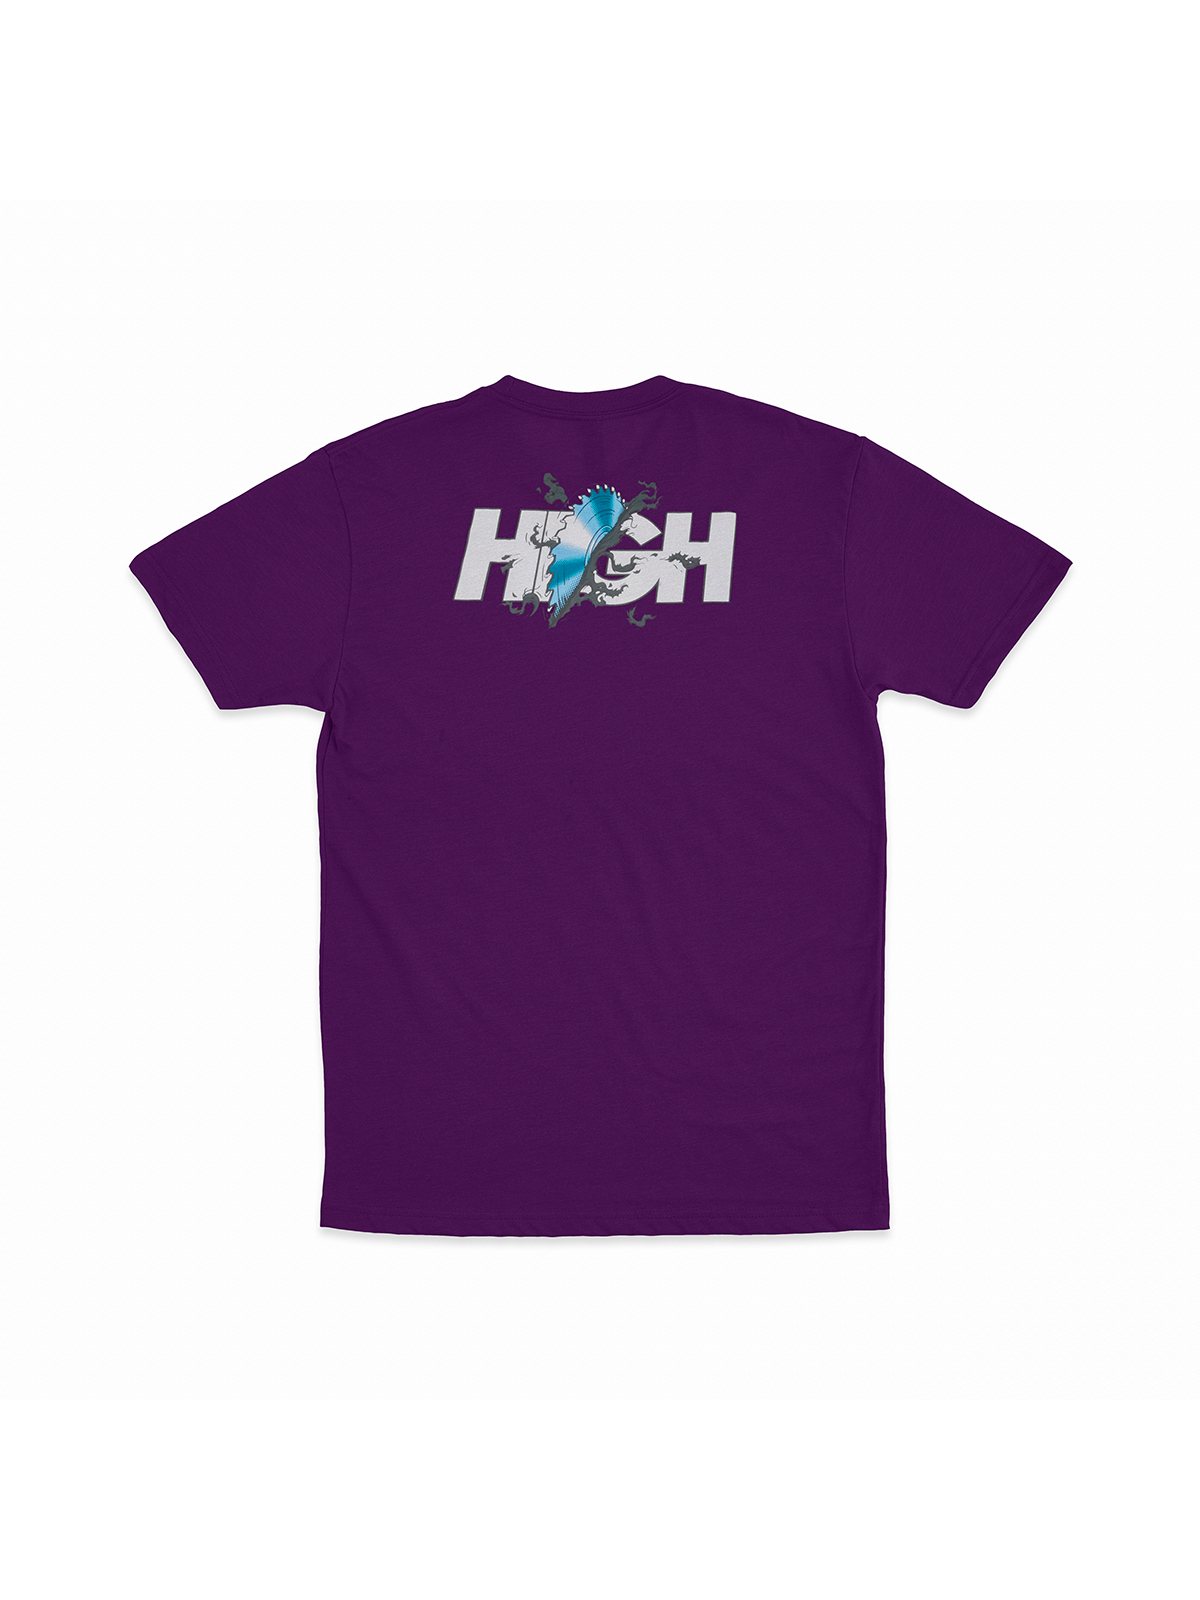 Camiseta High Company 100% algodão 30.1 - Camisa streetwear